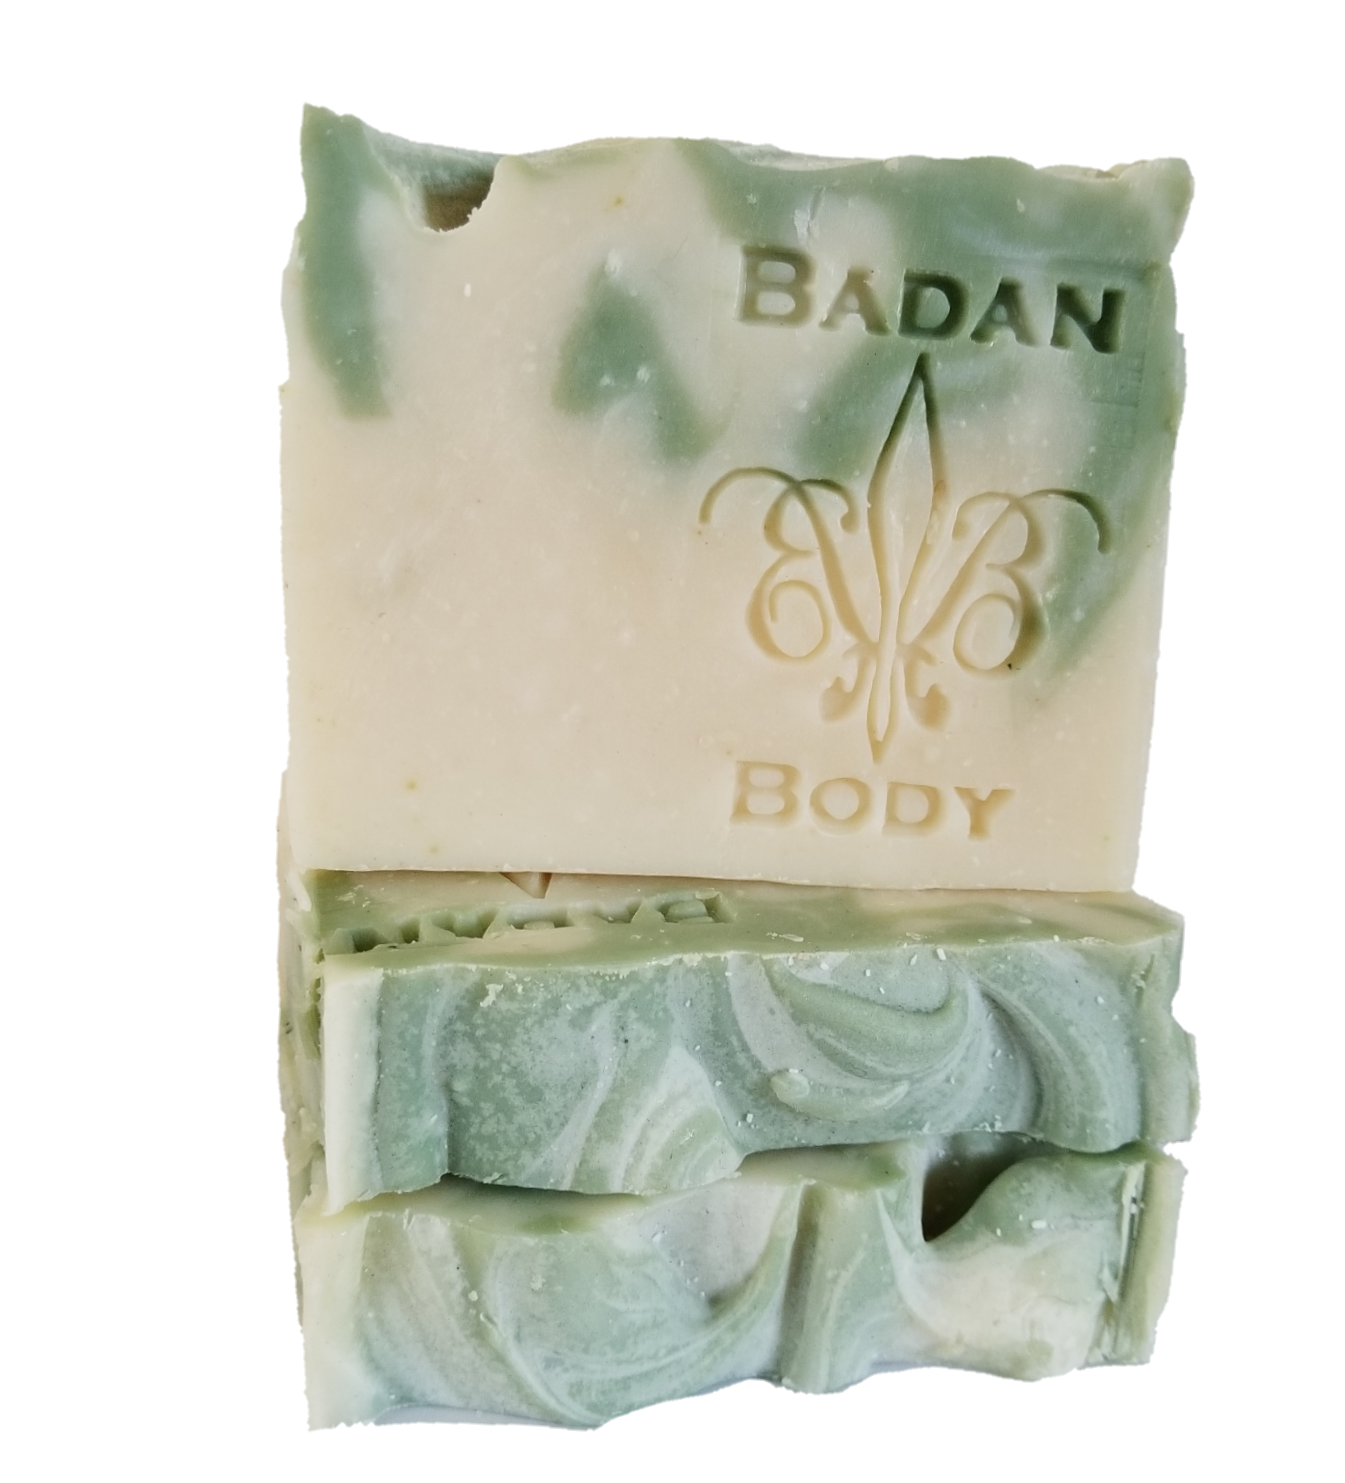 Clary & White Sage Shea Butter Soap - BadanBody